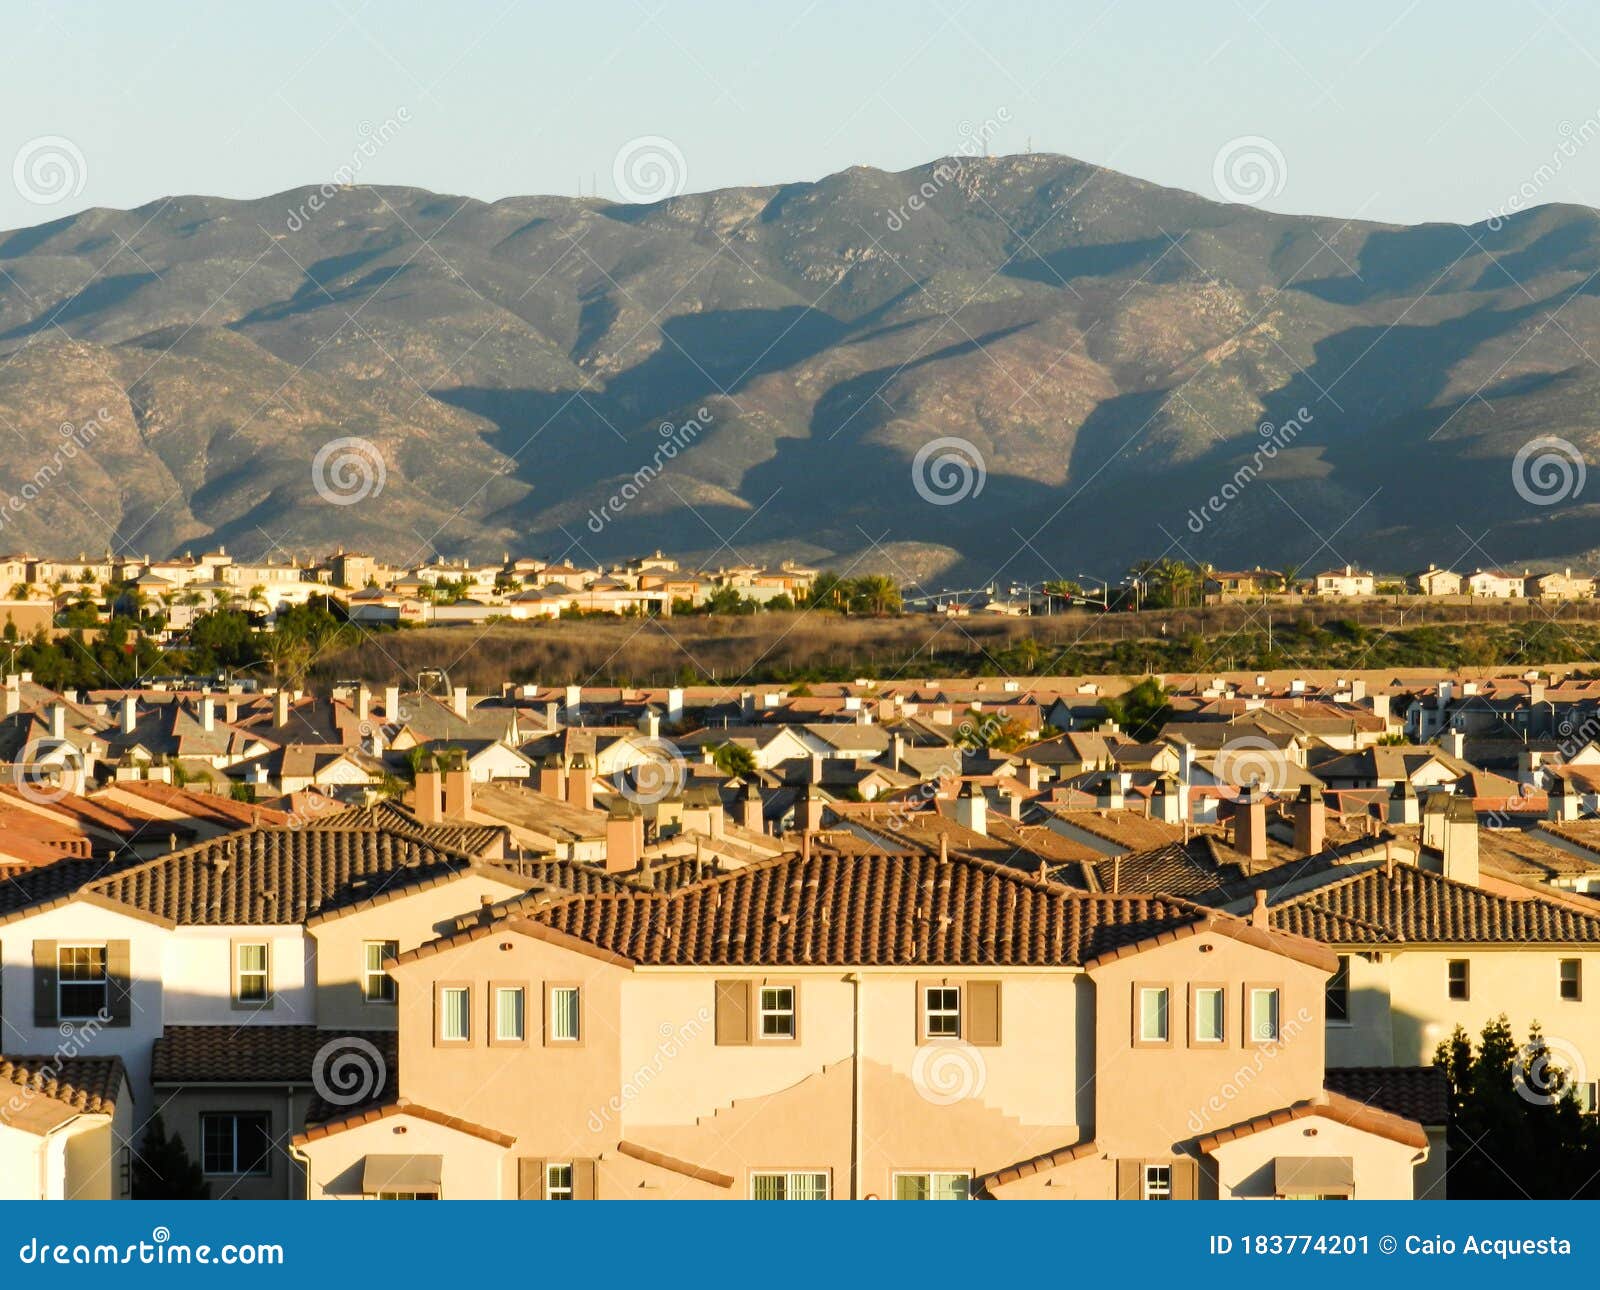 houses and the mountain, chula vista, california, usa